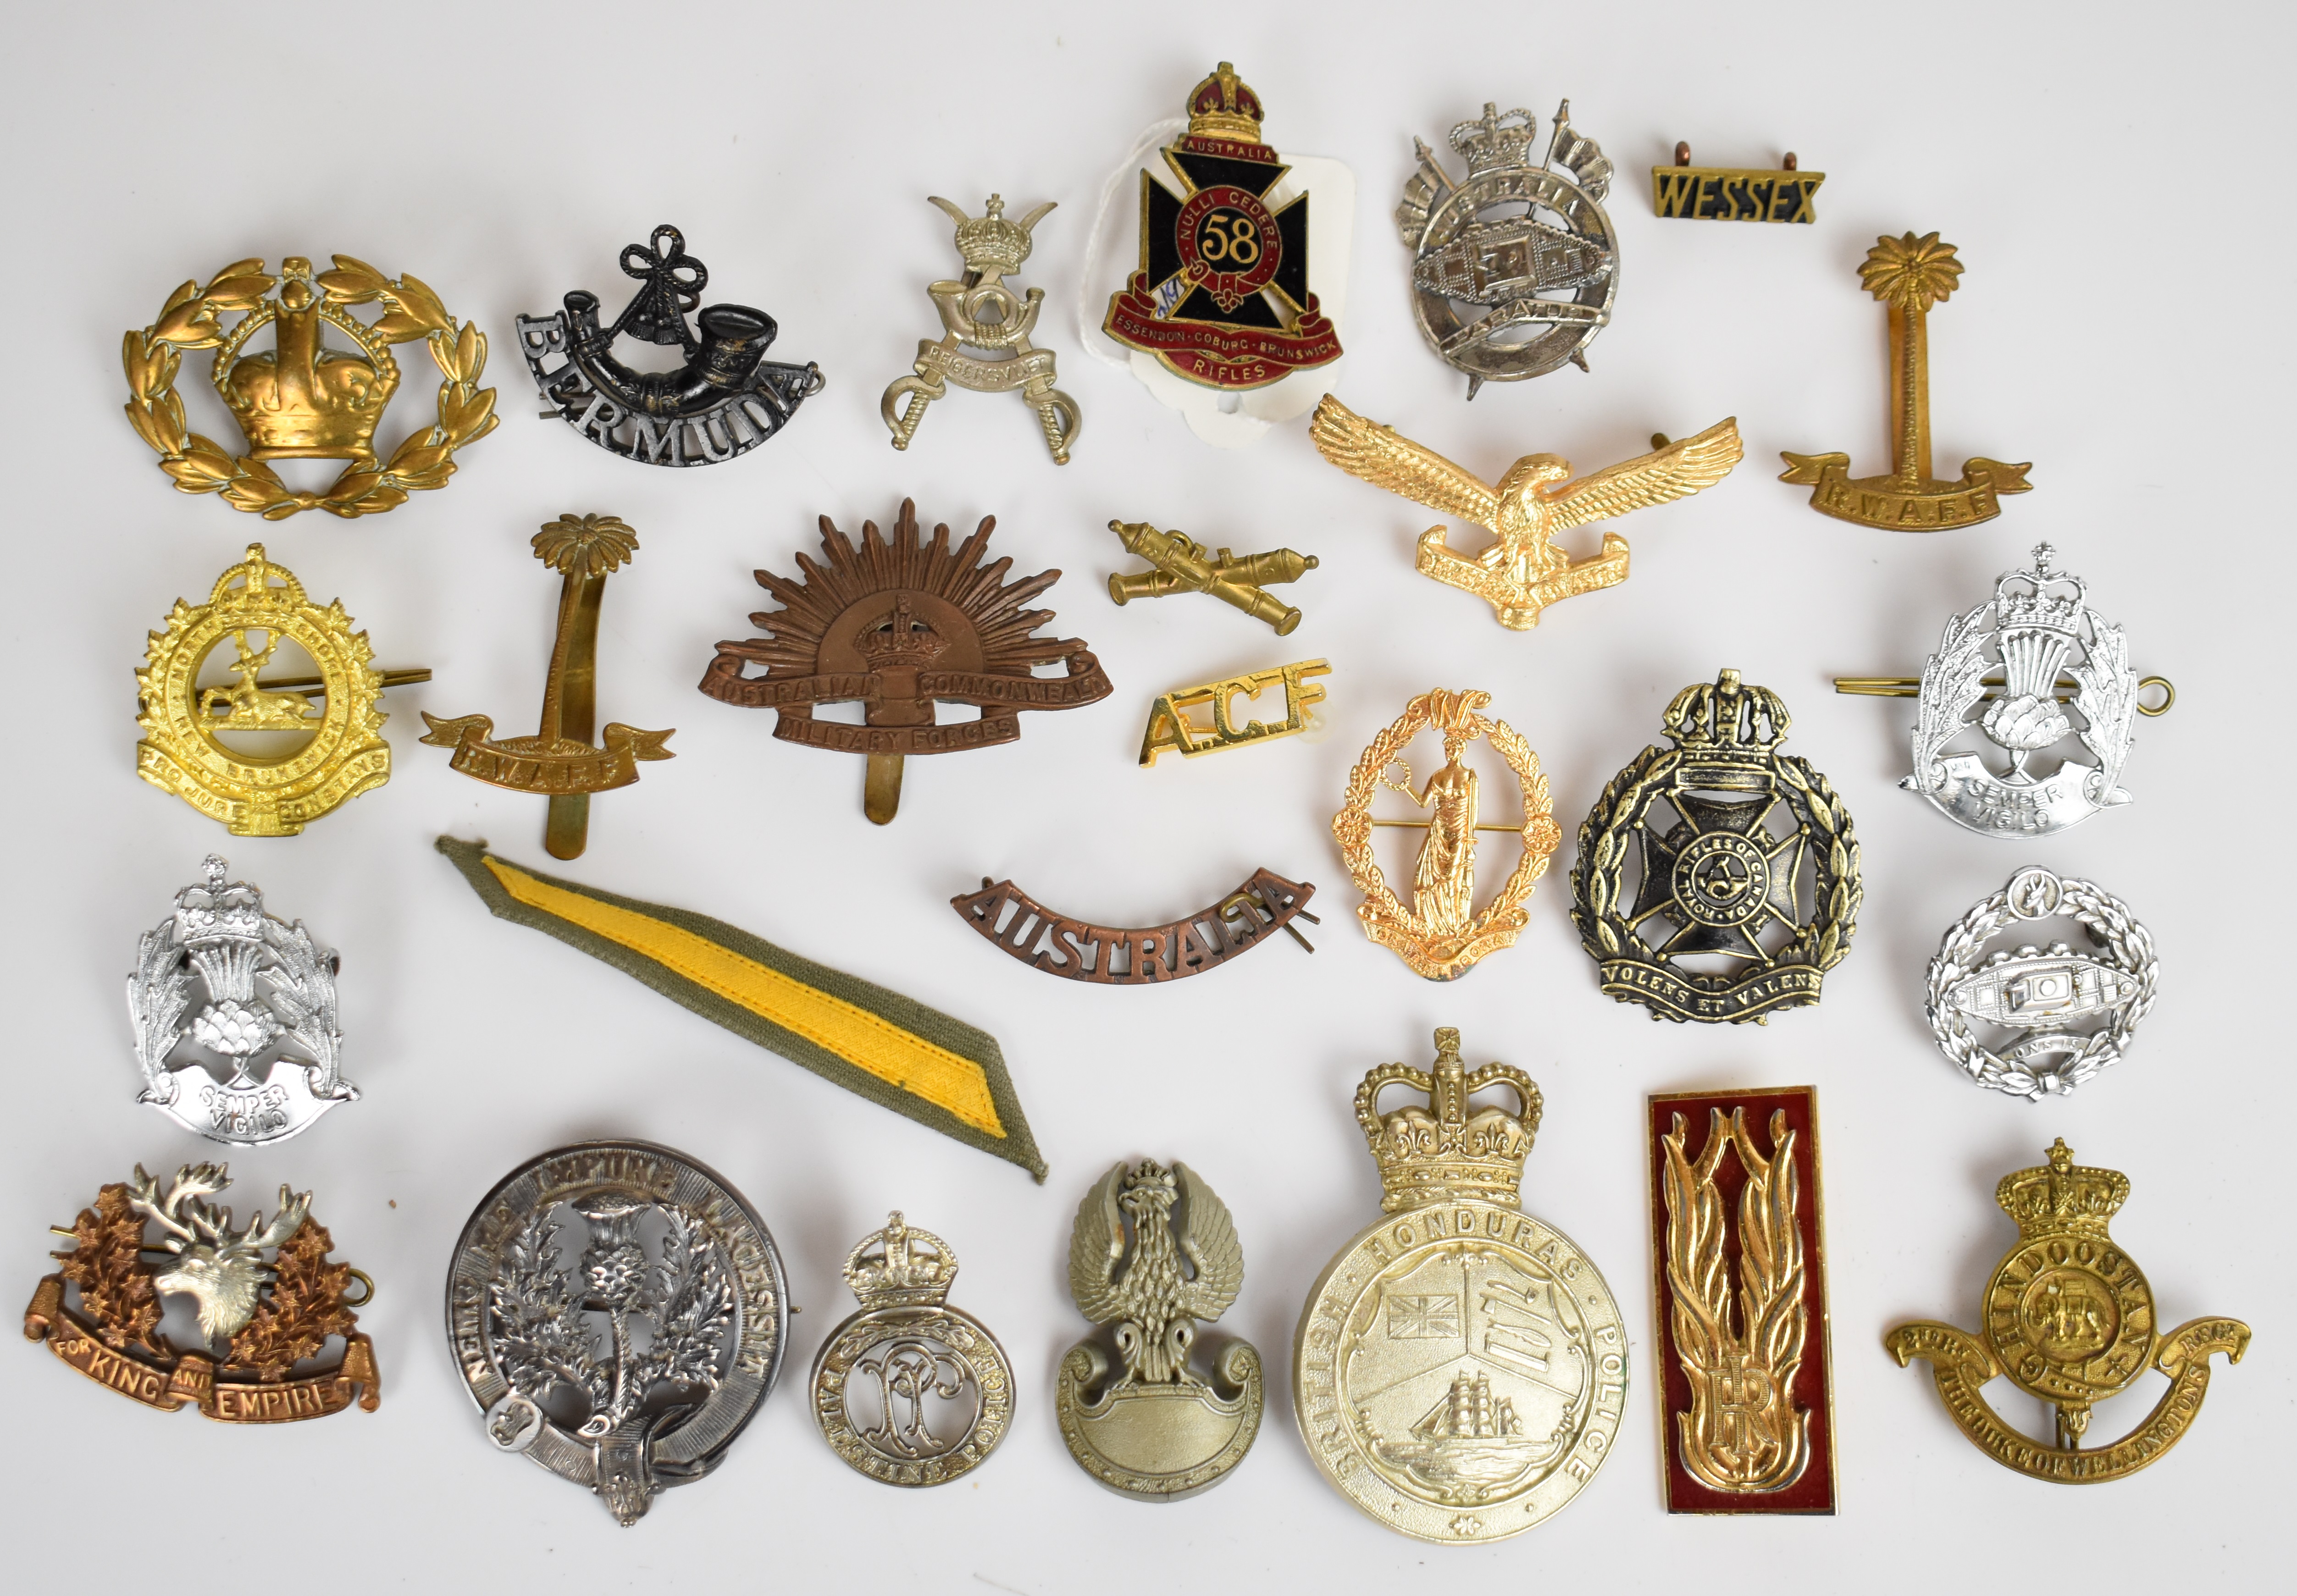 Approximately twenty overseas cap badges / badges including Australia Tank Regiment, South Africa